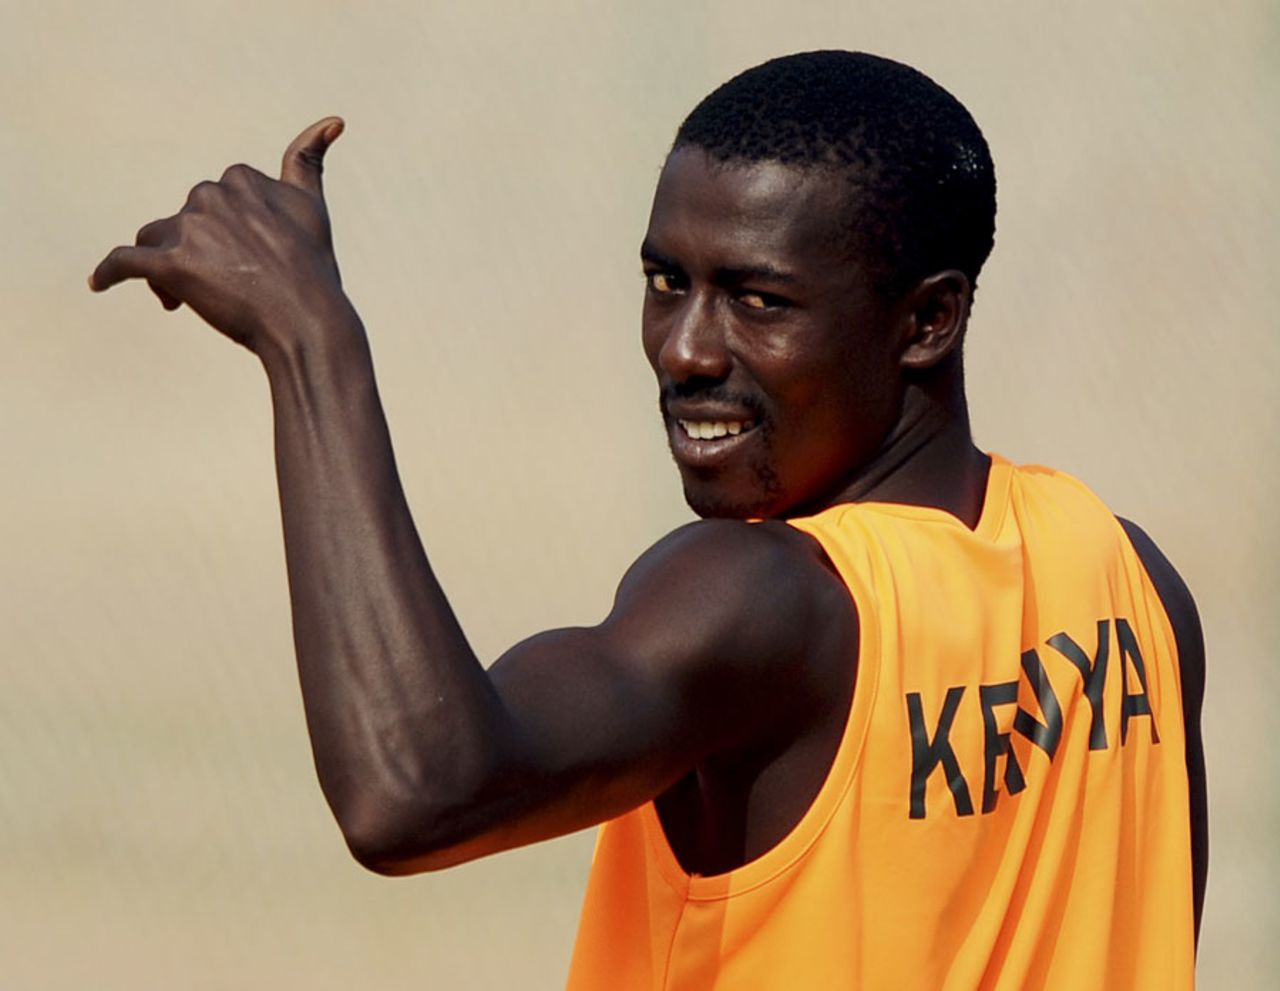 Kenya's captain Jimmy Kamande gestures during practice, Chennai, February 19, 2011